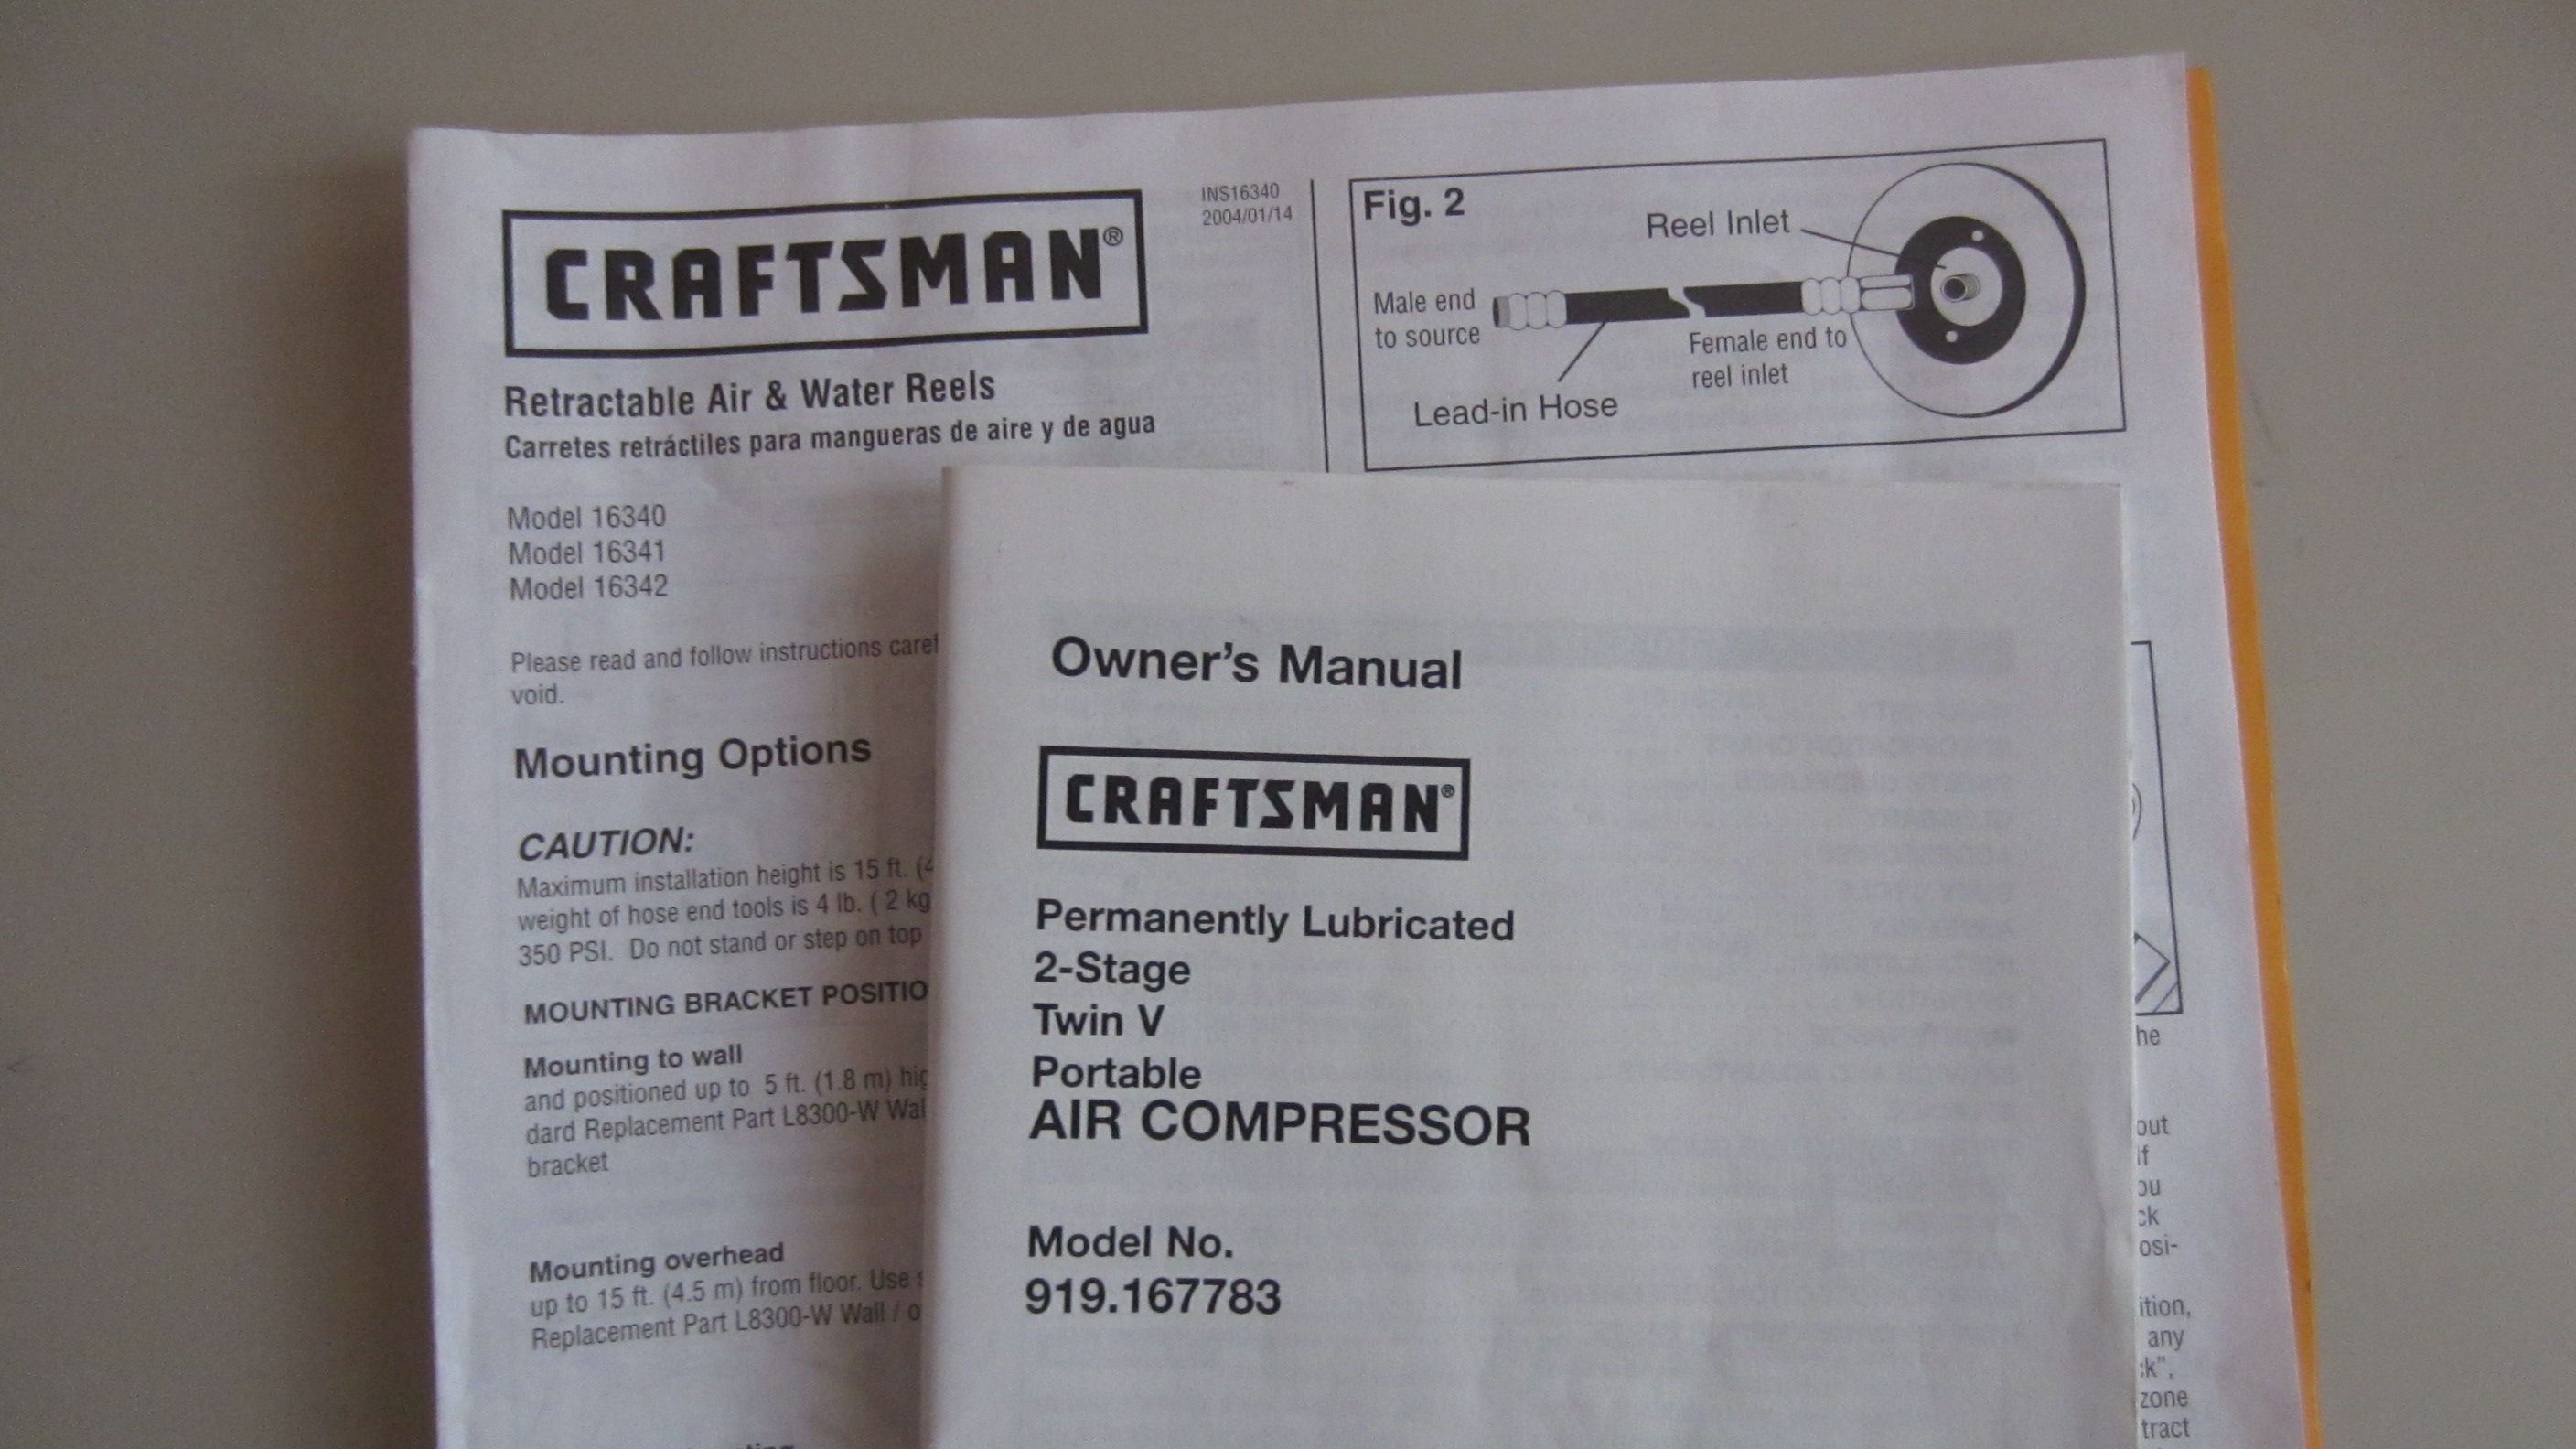 Craftsman Professional Air Compressor and Air Hose Reel - Harley Davidson  Forums